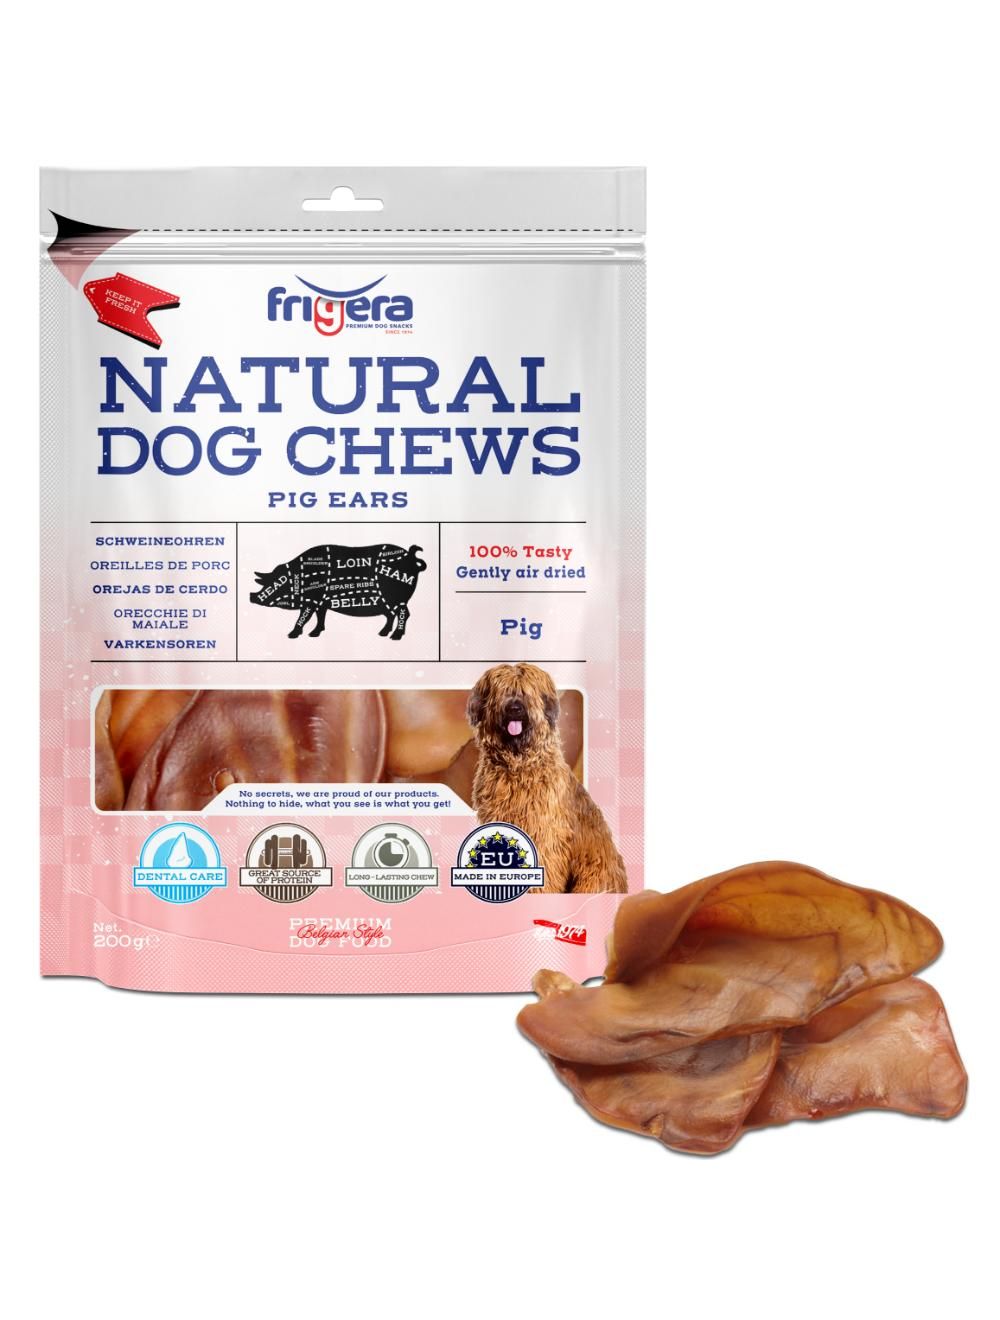 Frigera - Natural Dog Chews Pig ears 400gr - (402285851838) - Kjæledyr og utstyr